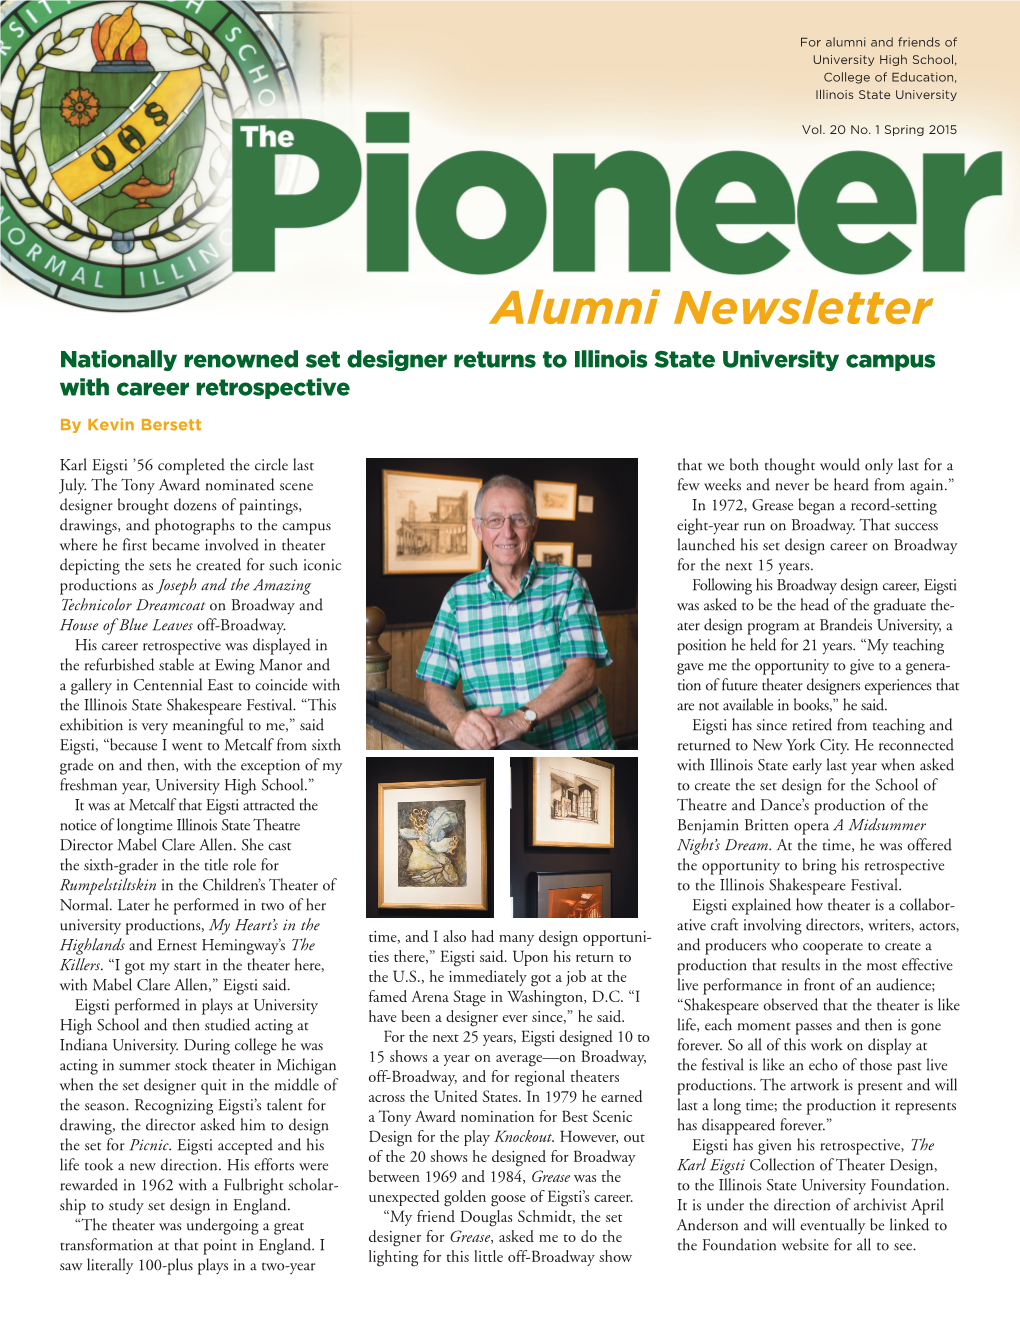 Alumni Newsletter Nationally Renowned Set Designer Returns to Illinois State University Campus with Career Retrospective